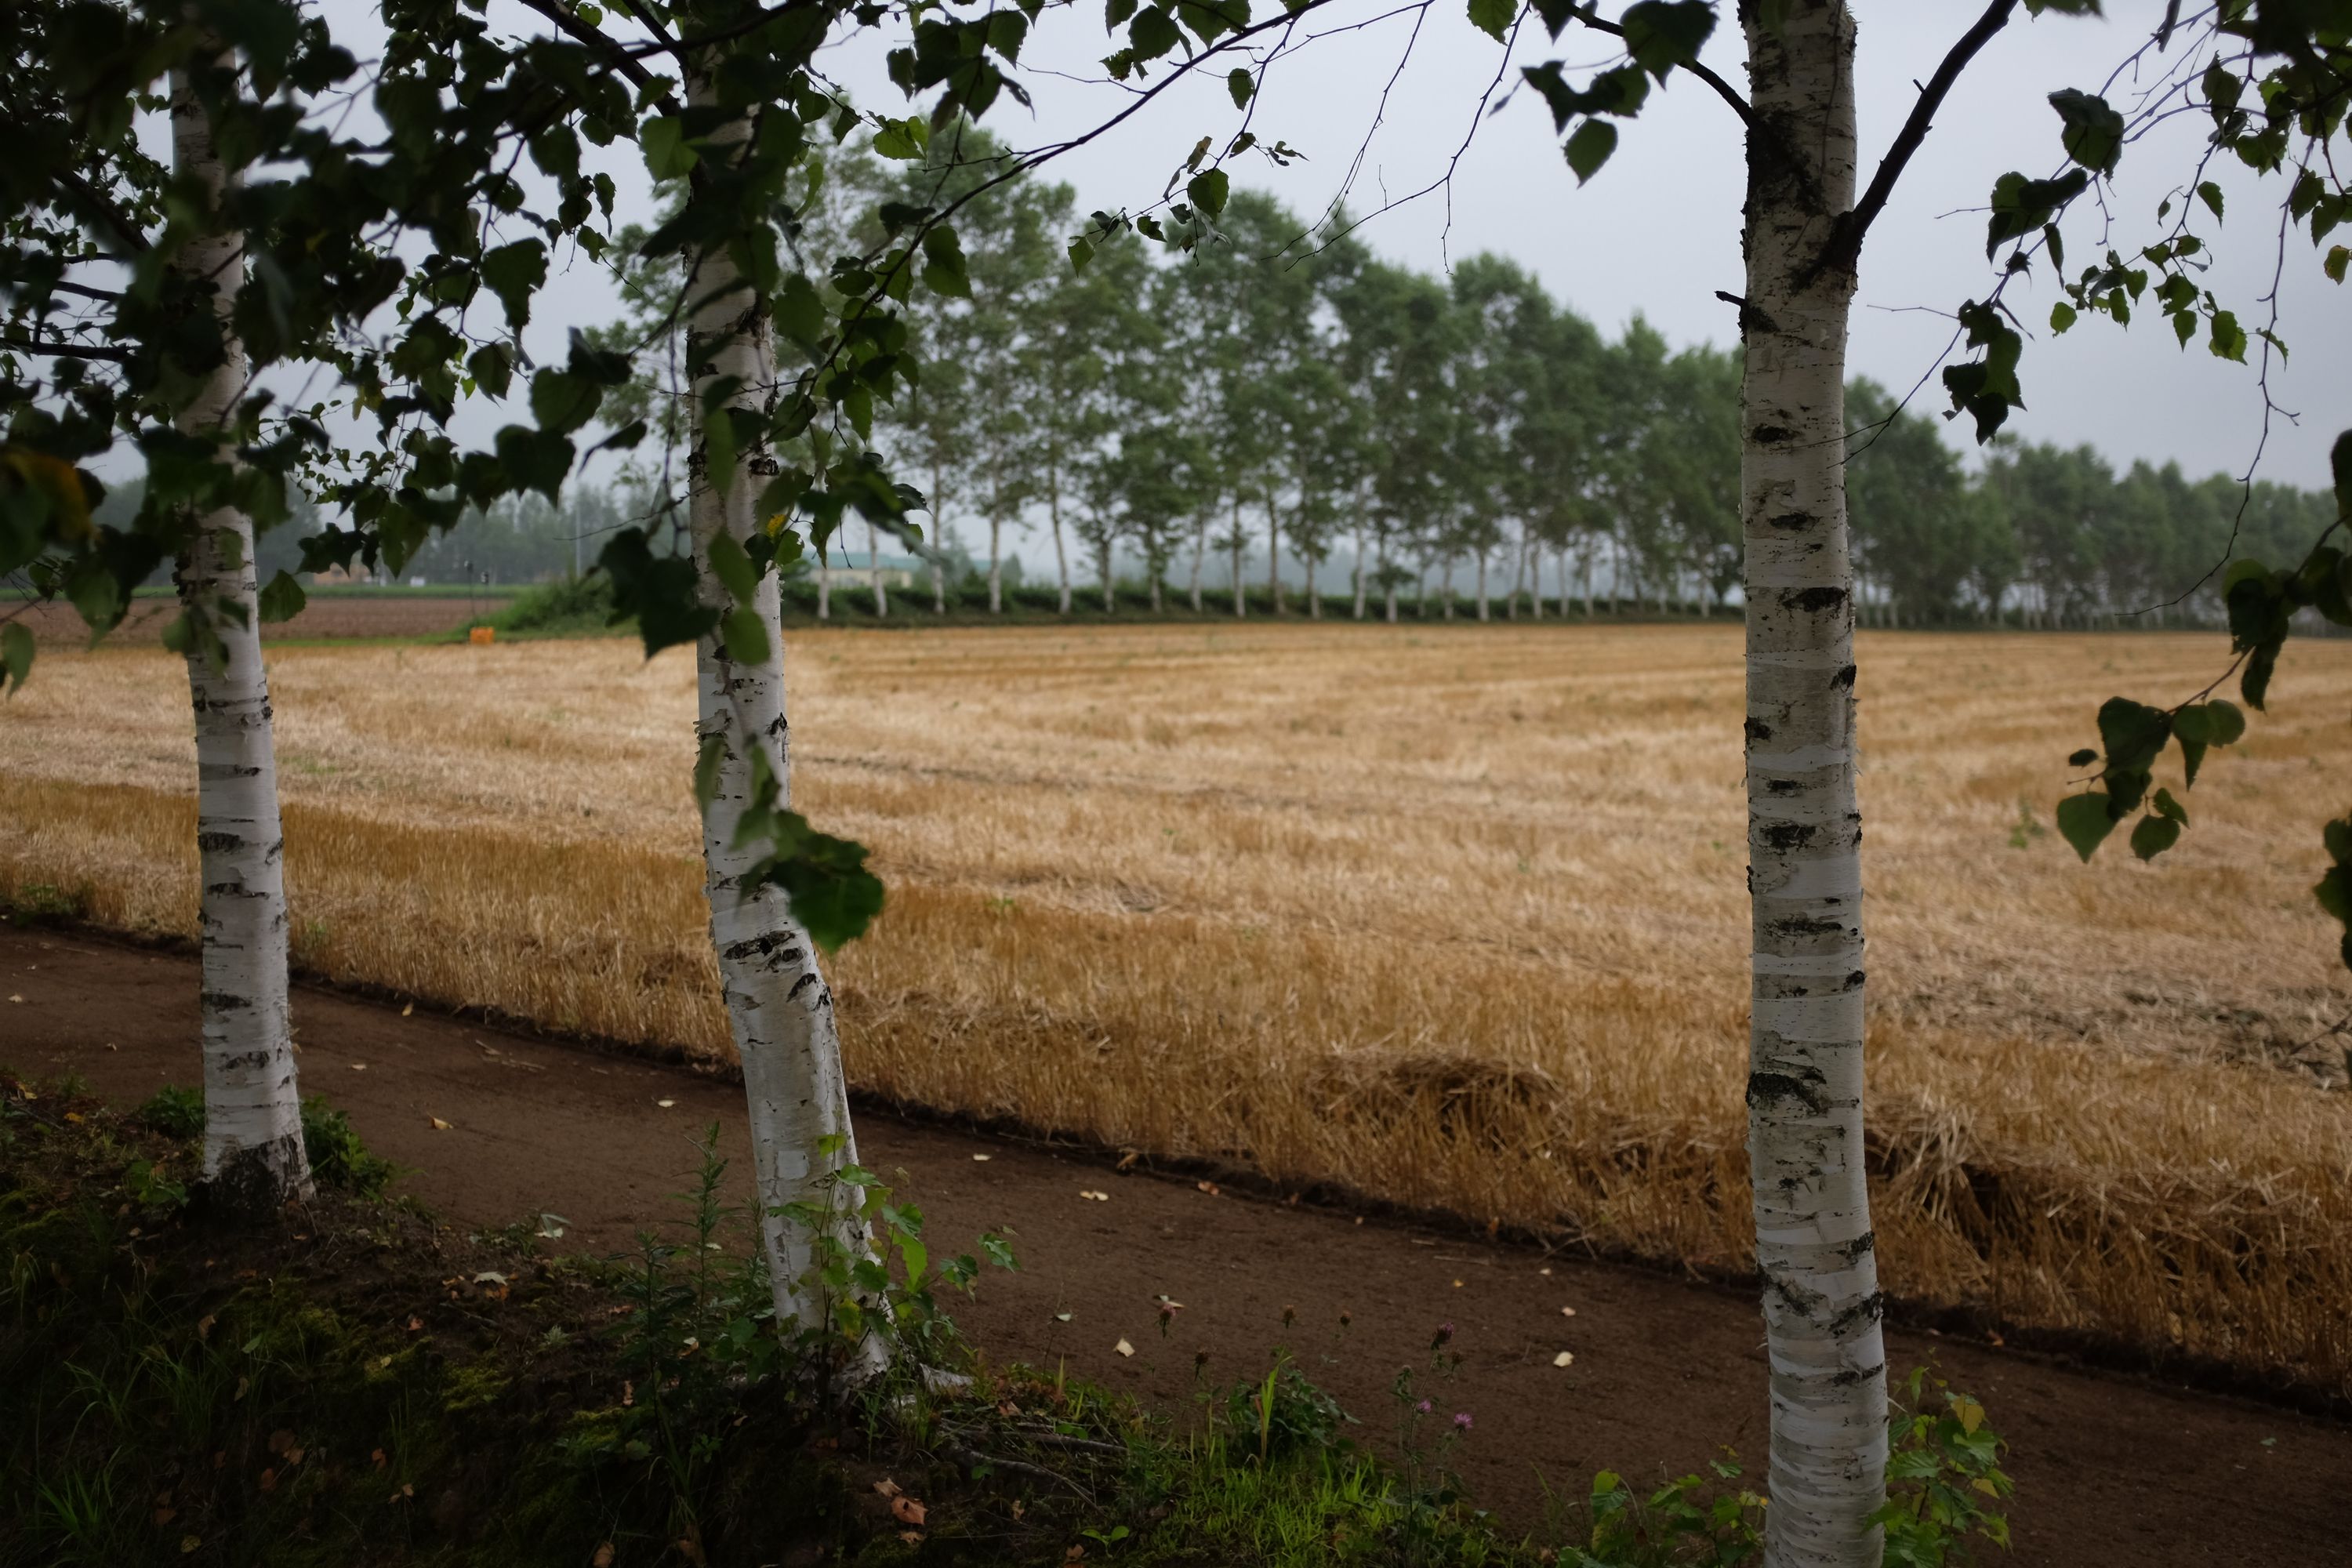 Three birch trees by a wheat field.